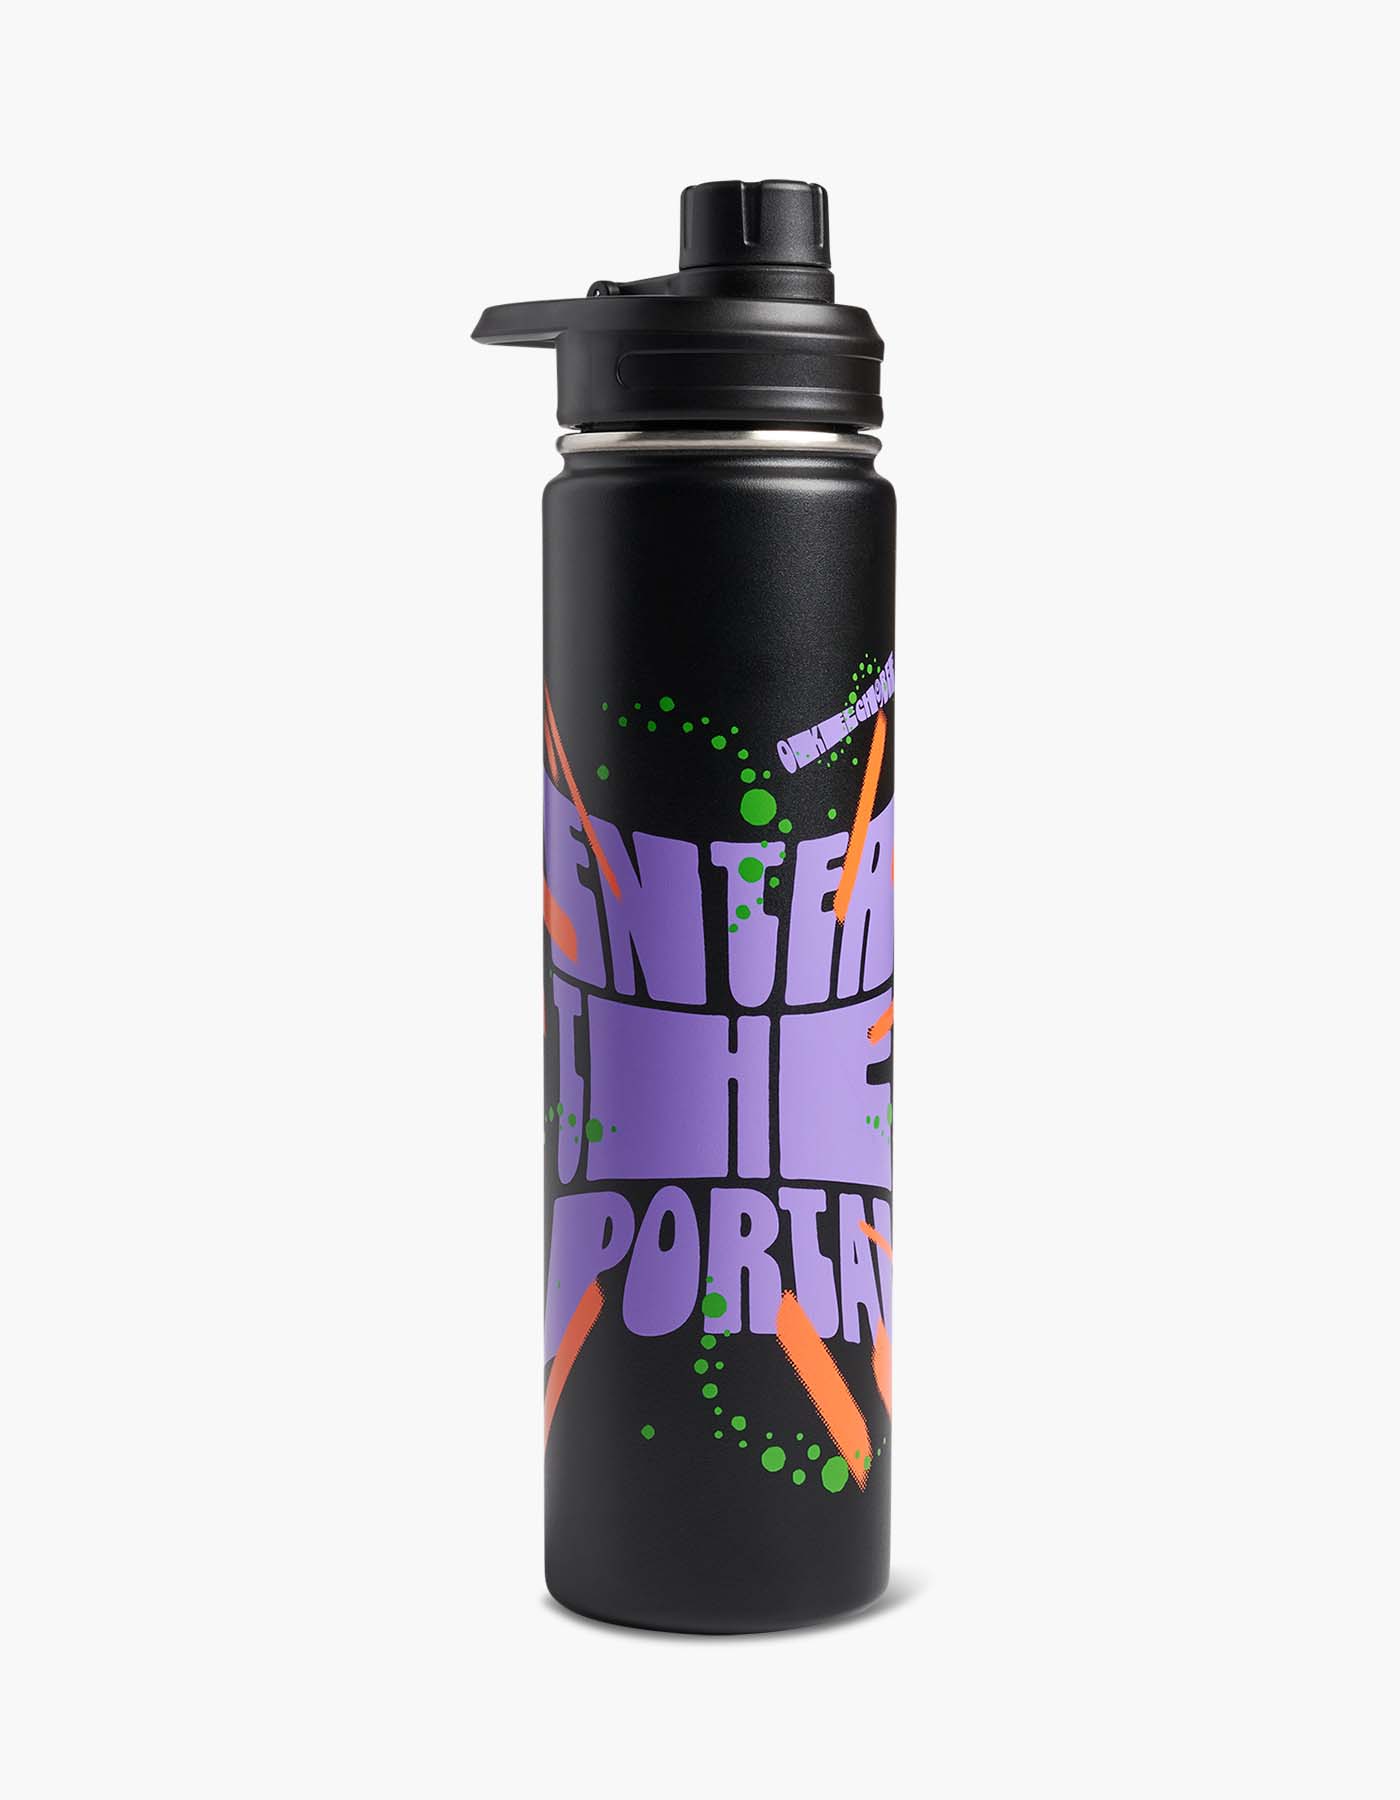 Enter the Portal Water Bottle